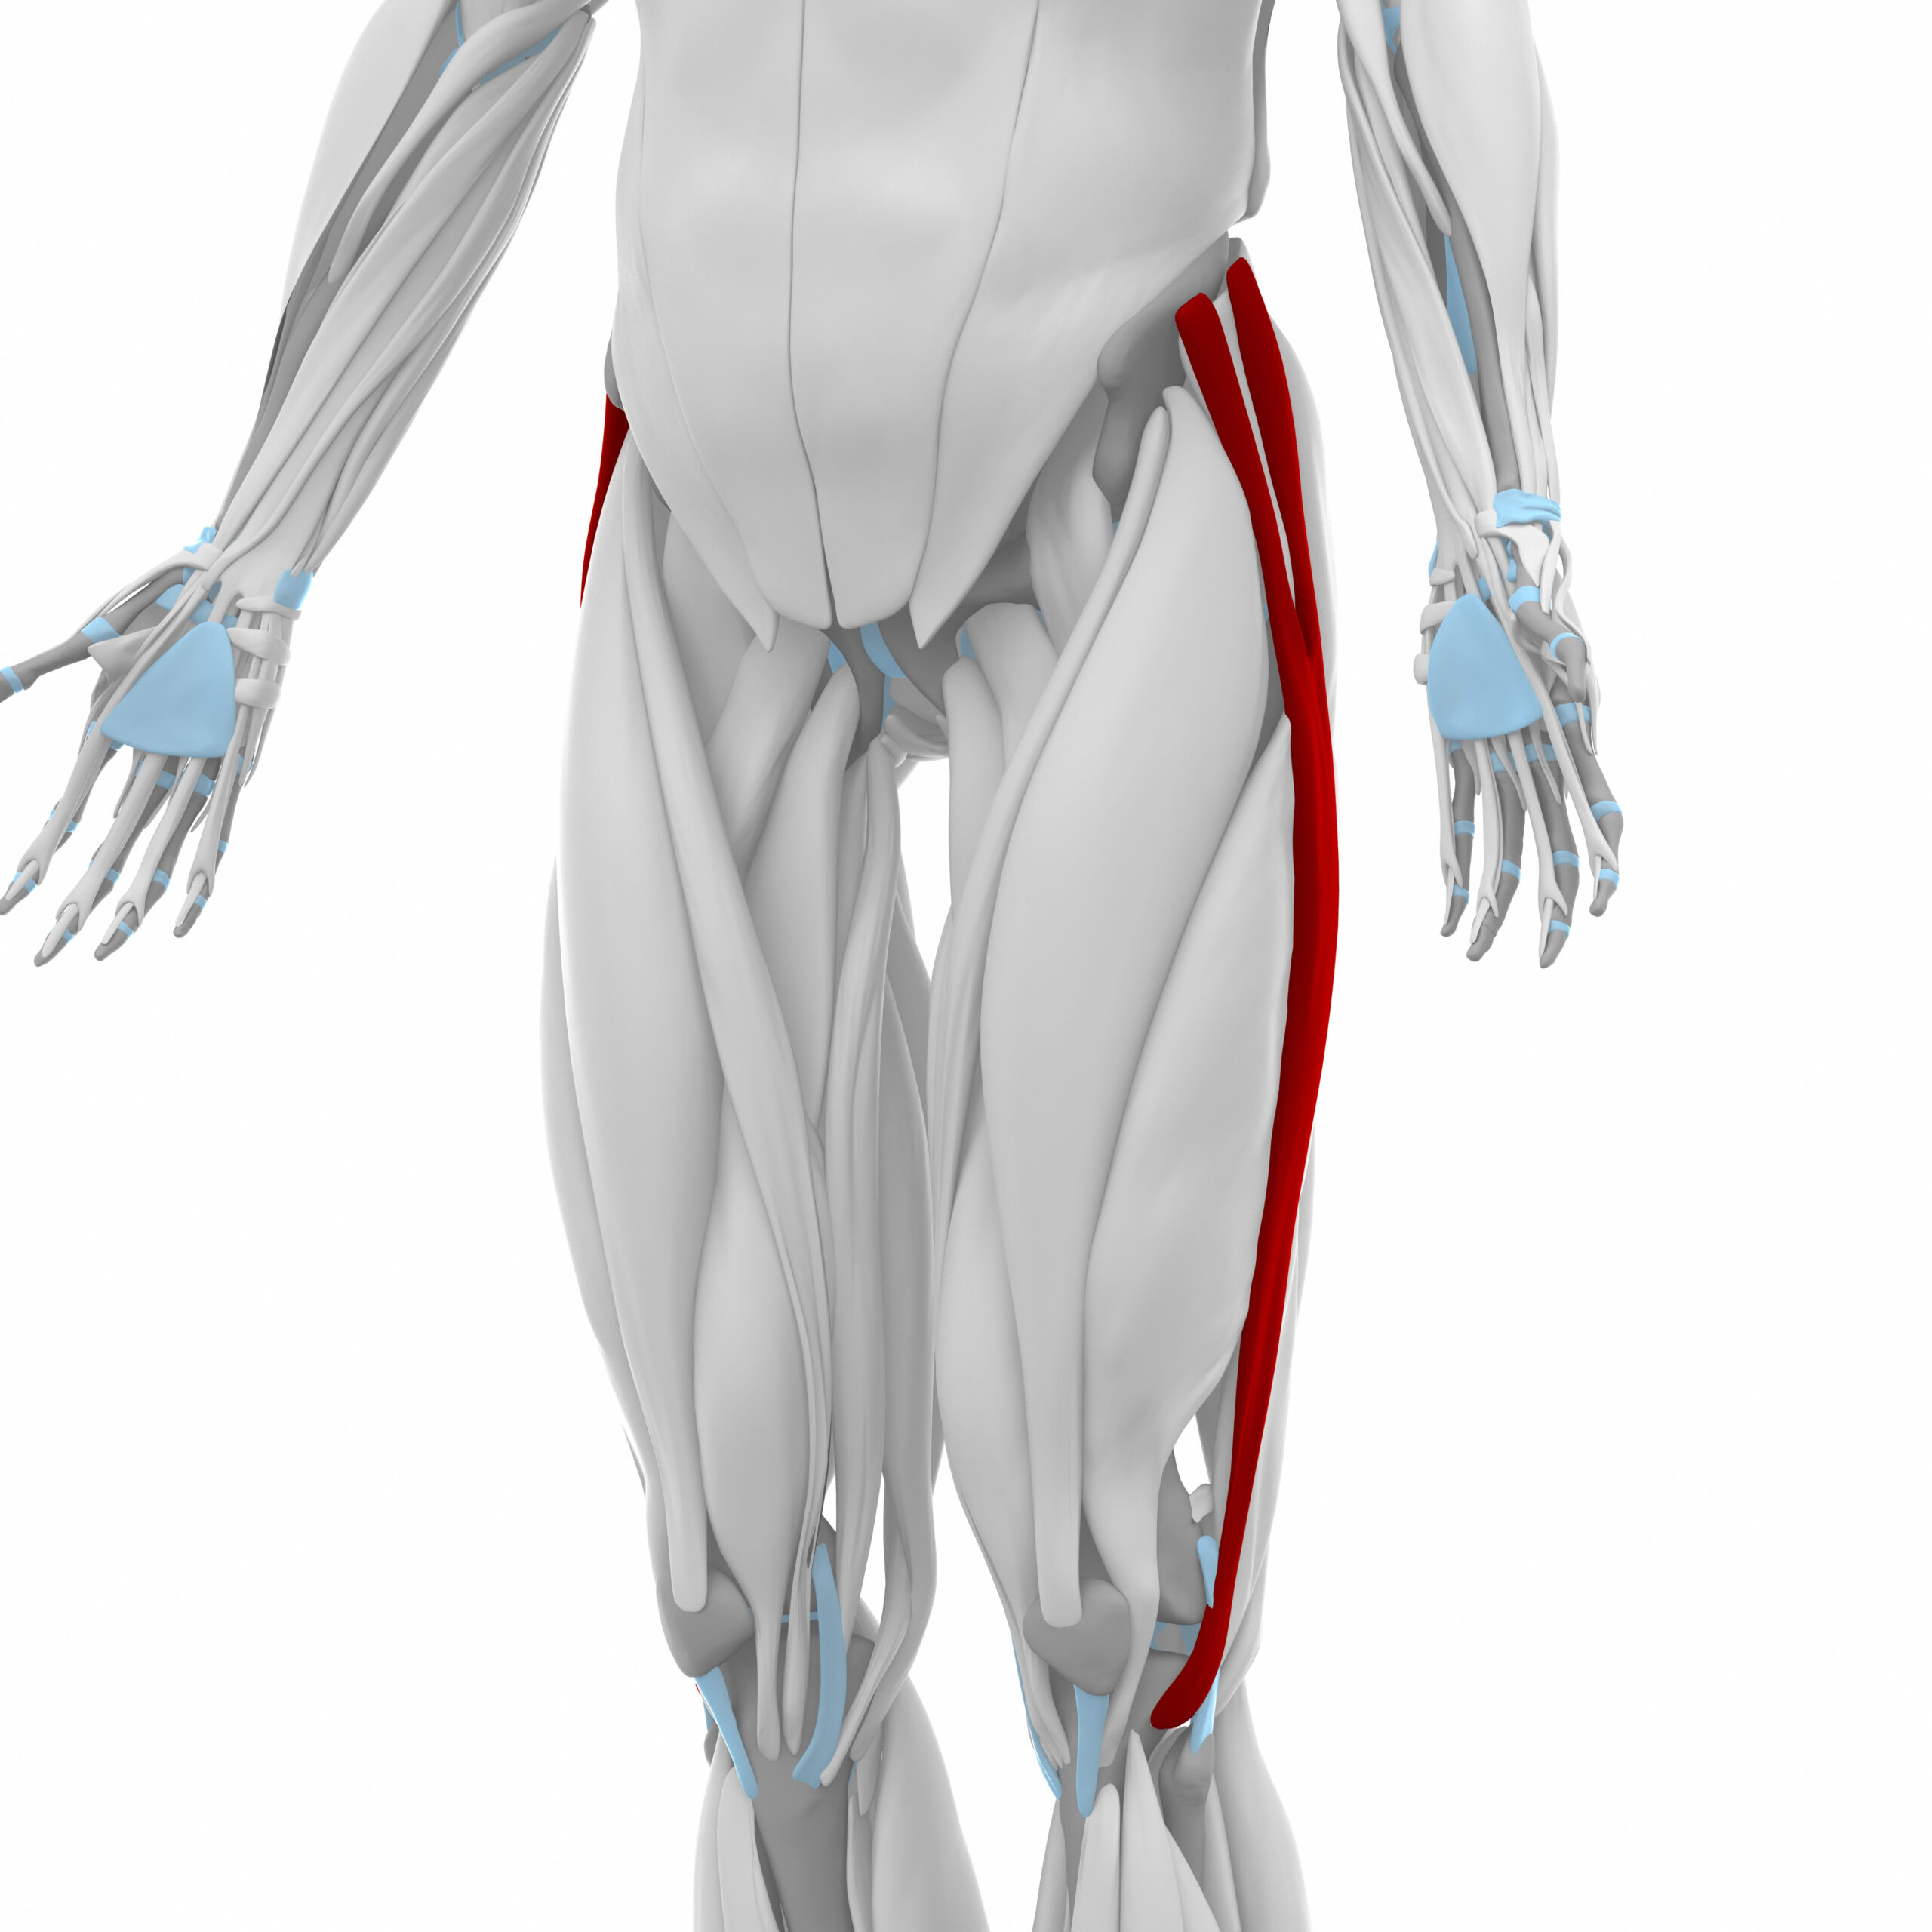 Iliotibial tract - Muscles anatomy map